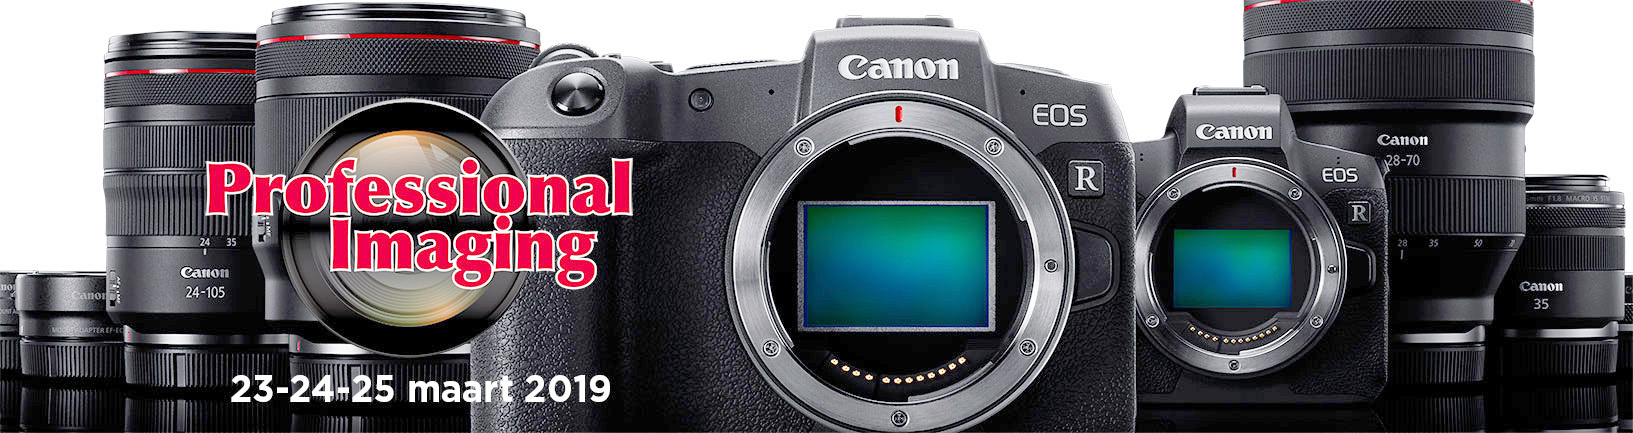 Canon Professional Imaging 2019